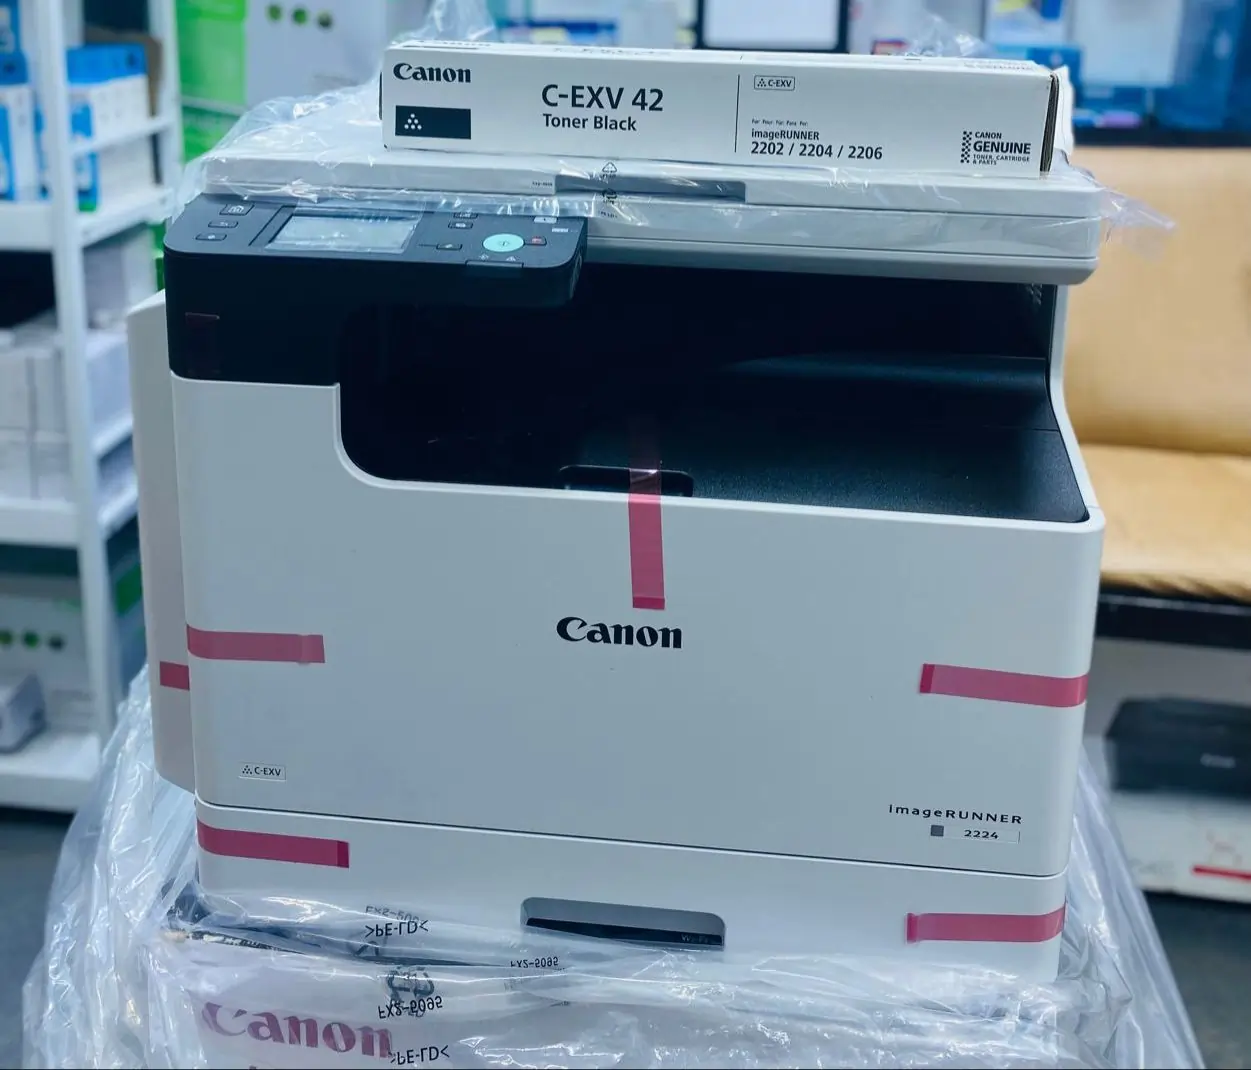 Canon Ir 2224, Print Copy Scan Resolution: 600X 600 Dpi, Duty Cycle: 30000 Copies